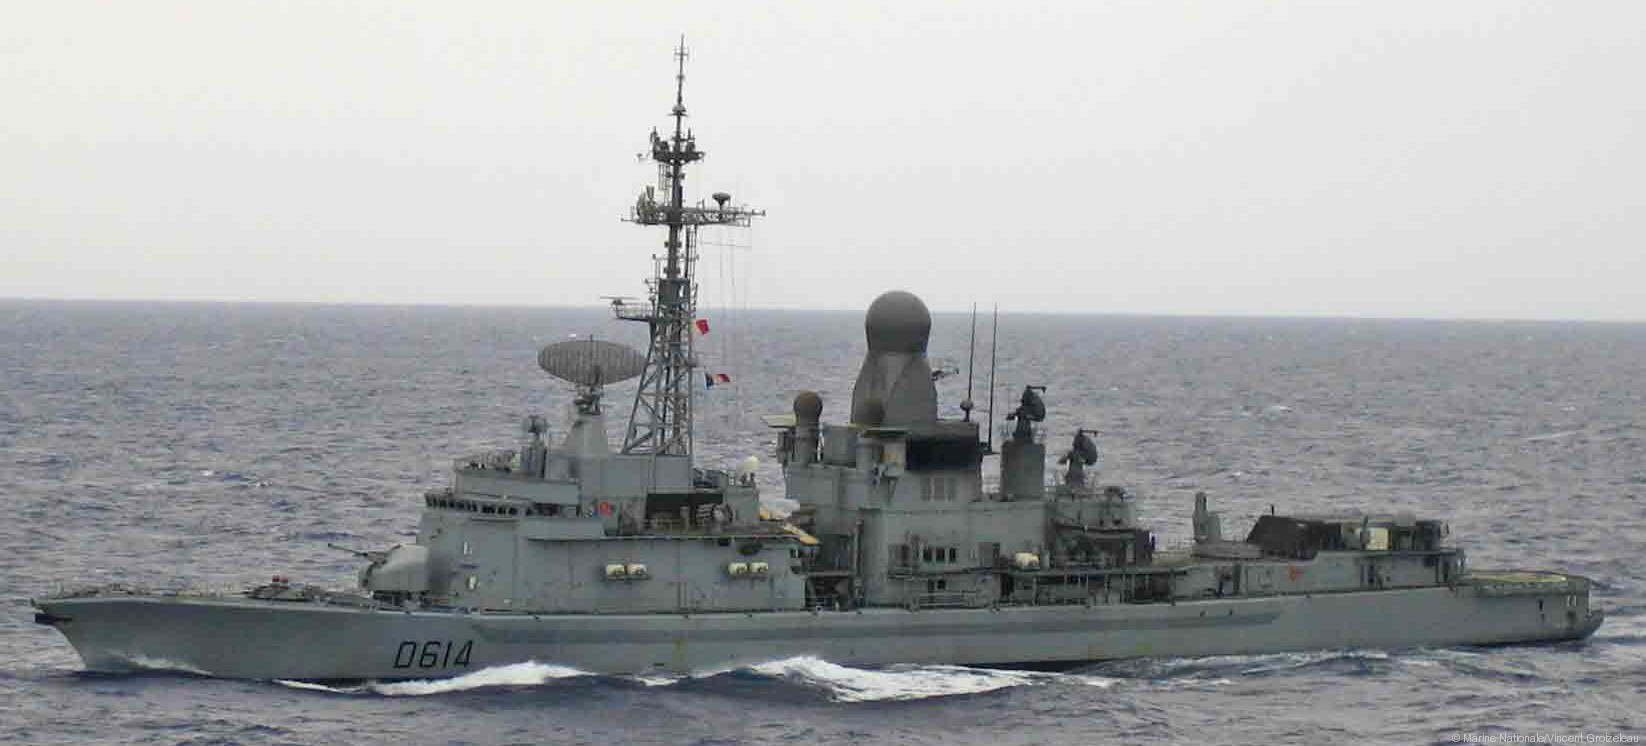 d-614 fs cassard f70aa class air defense frigate french navy marine nationale 11